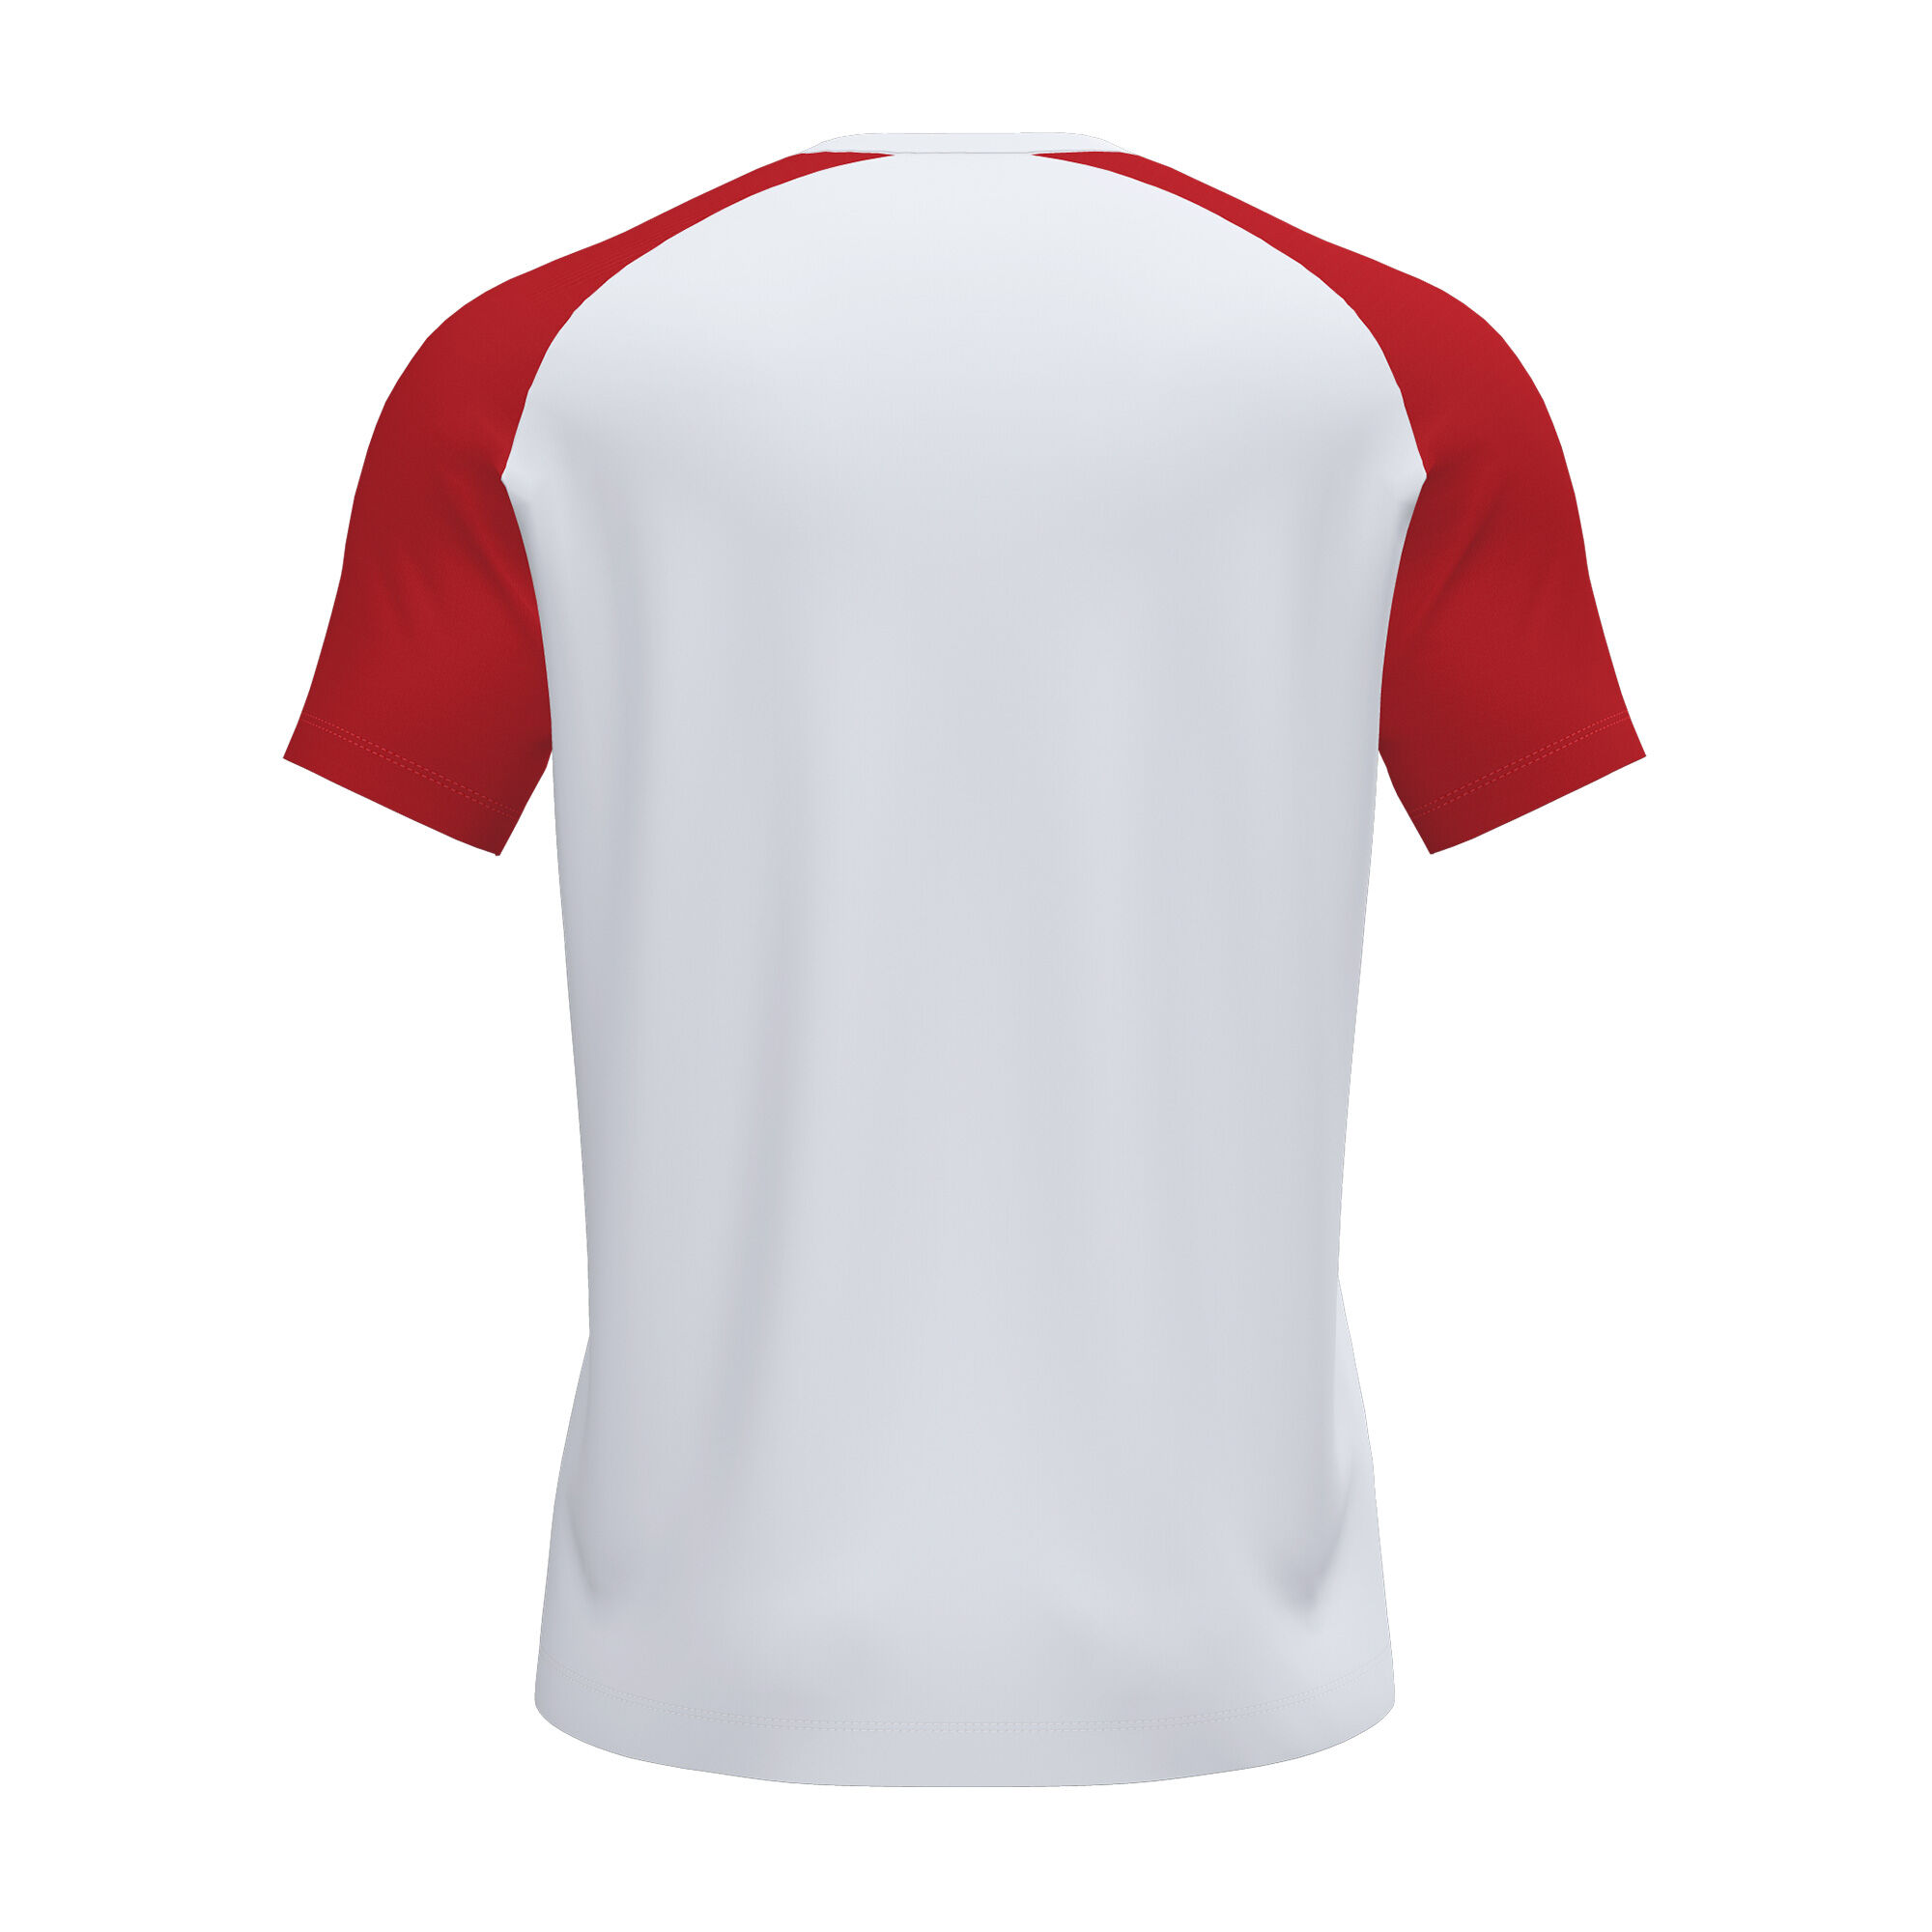 Shirt short sleeve man Academy IV white red